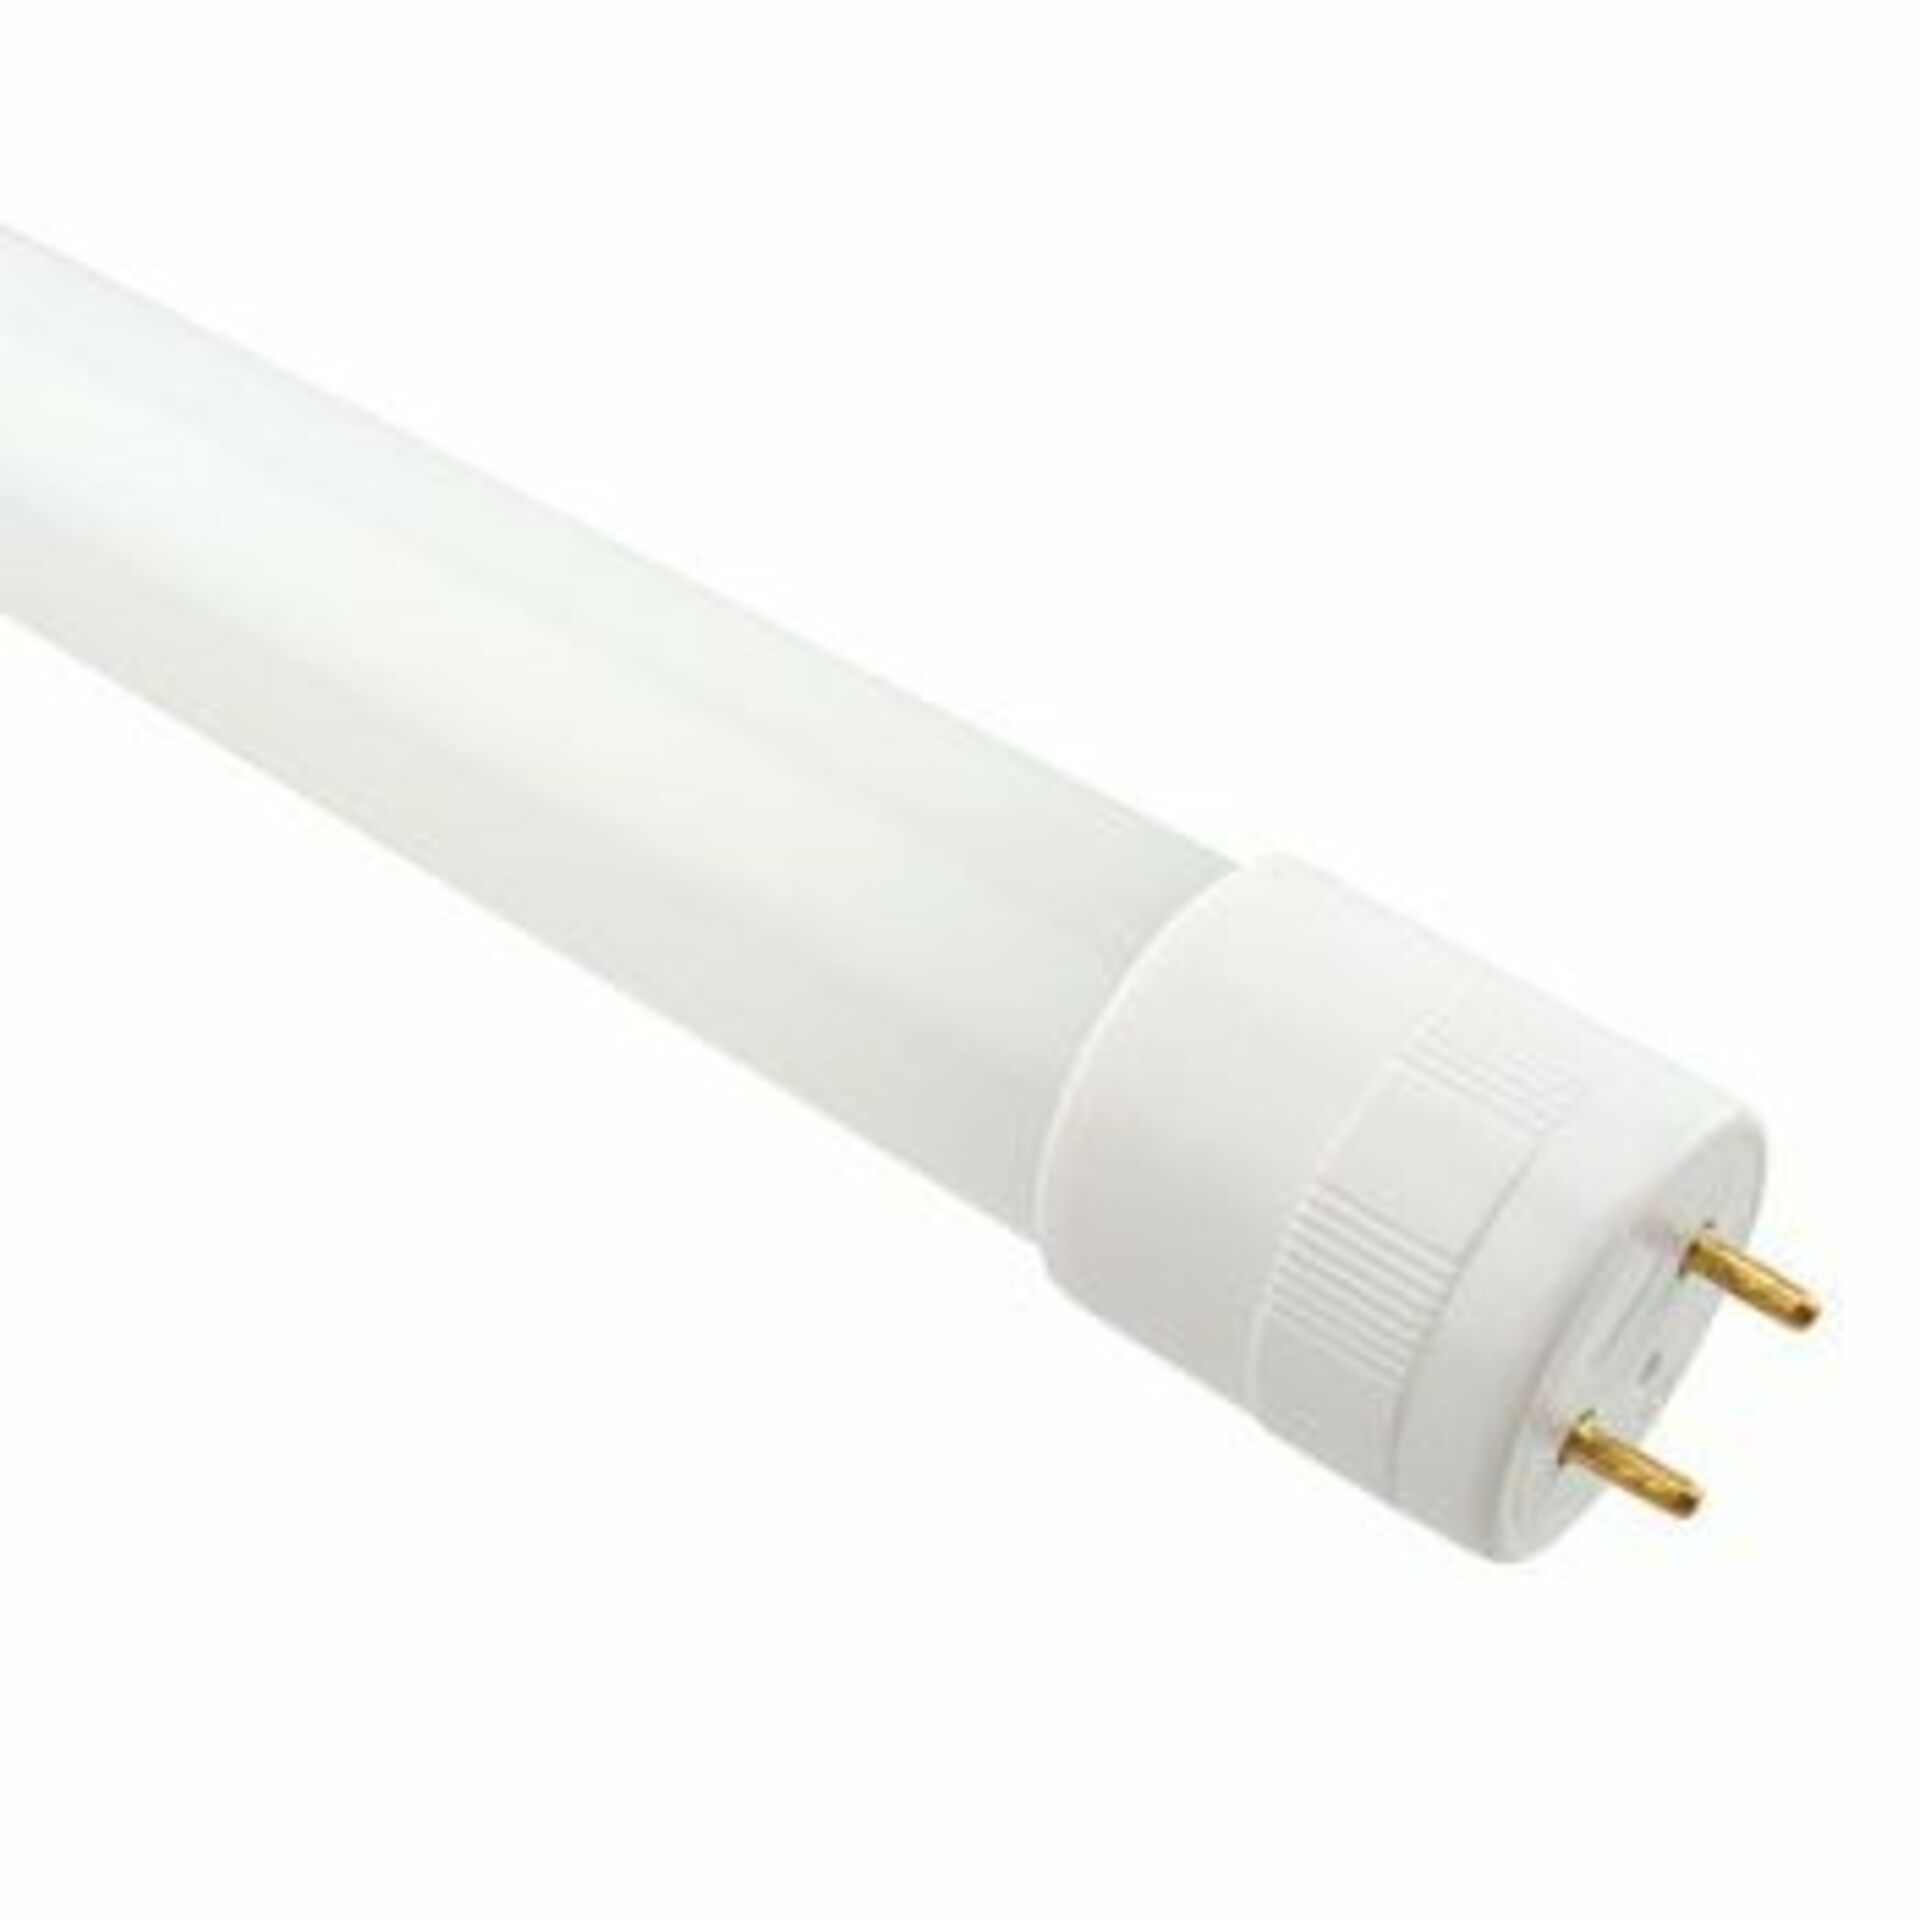 FKT LED trubice T8 ECO-S, 60cm, 4200K, 950lm, 10W, 2835, 230V, mléčná , sklo